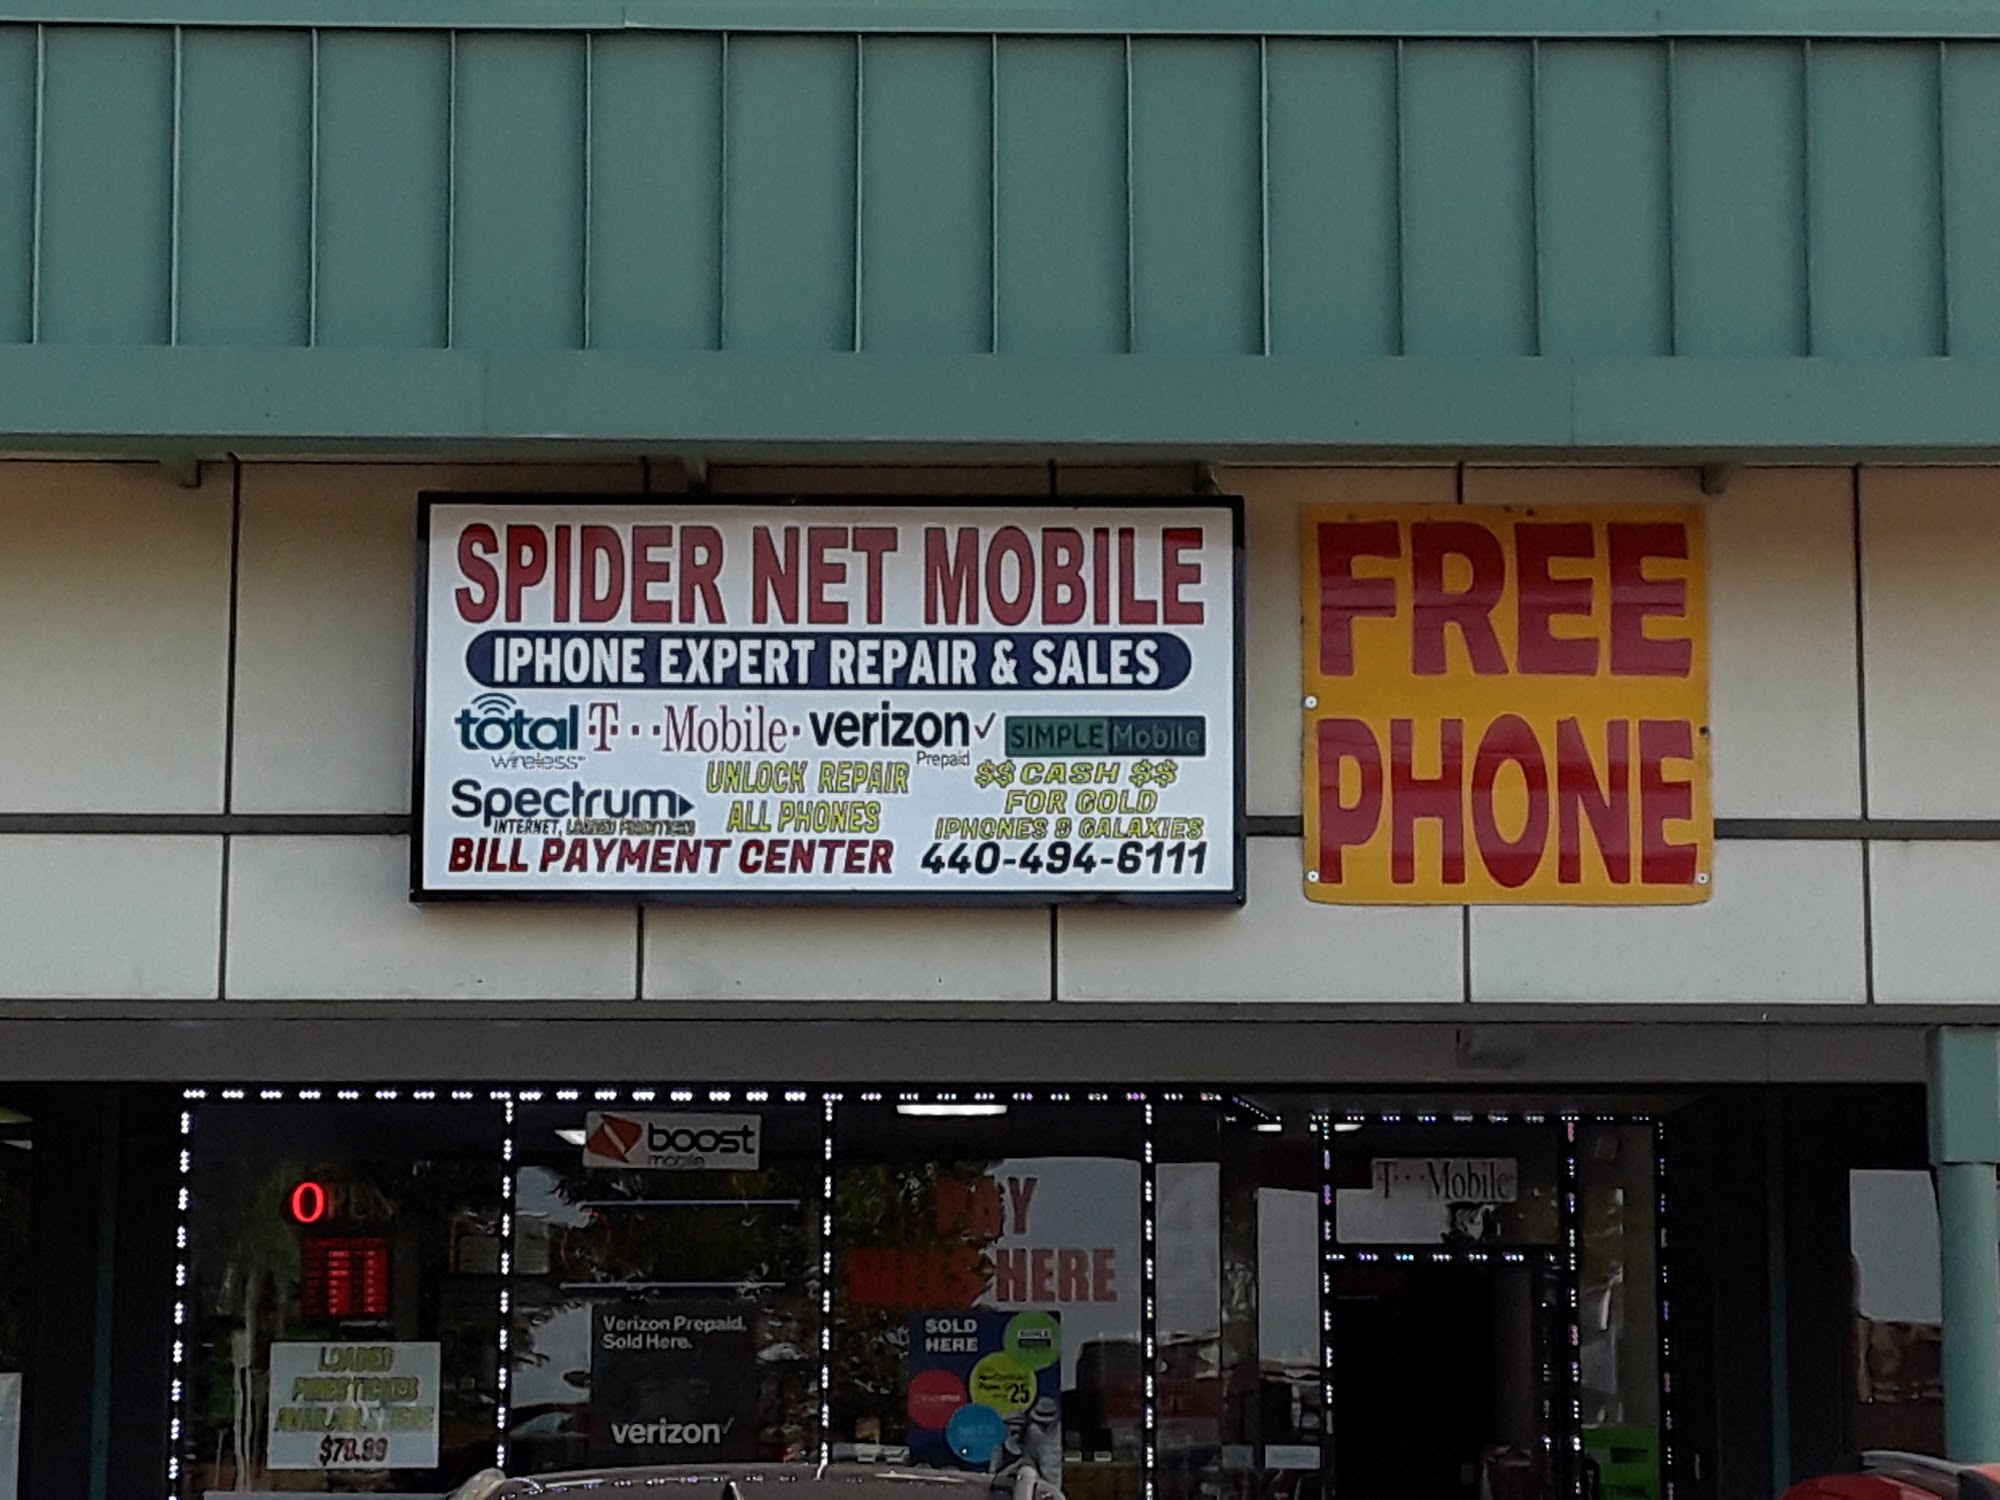 Spider Net Mobile